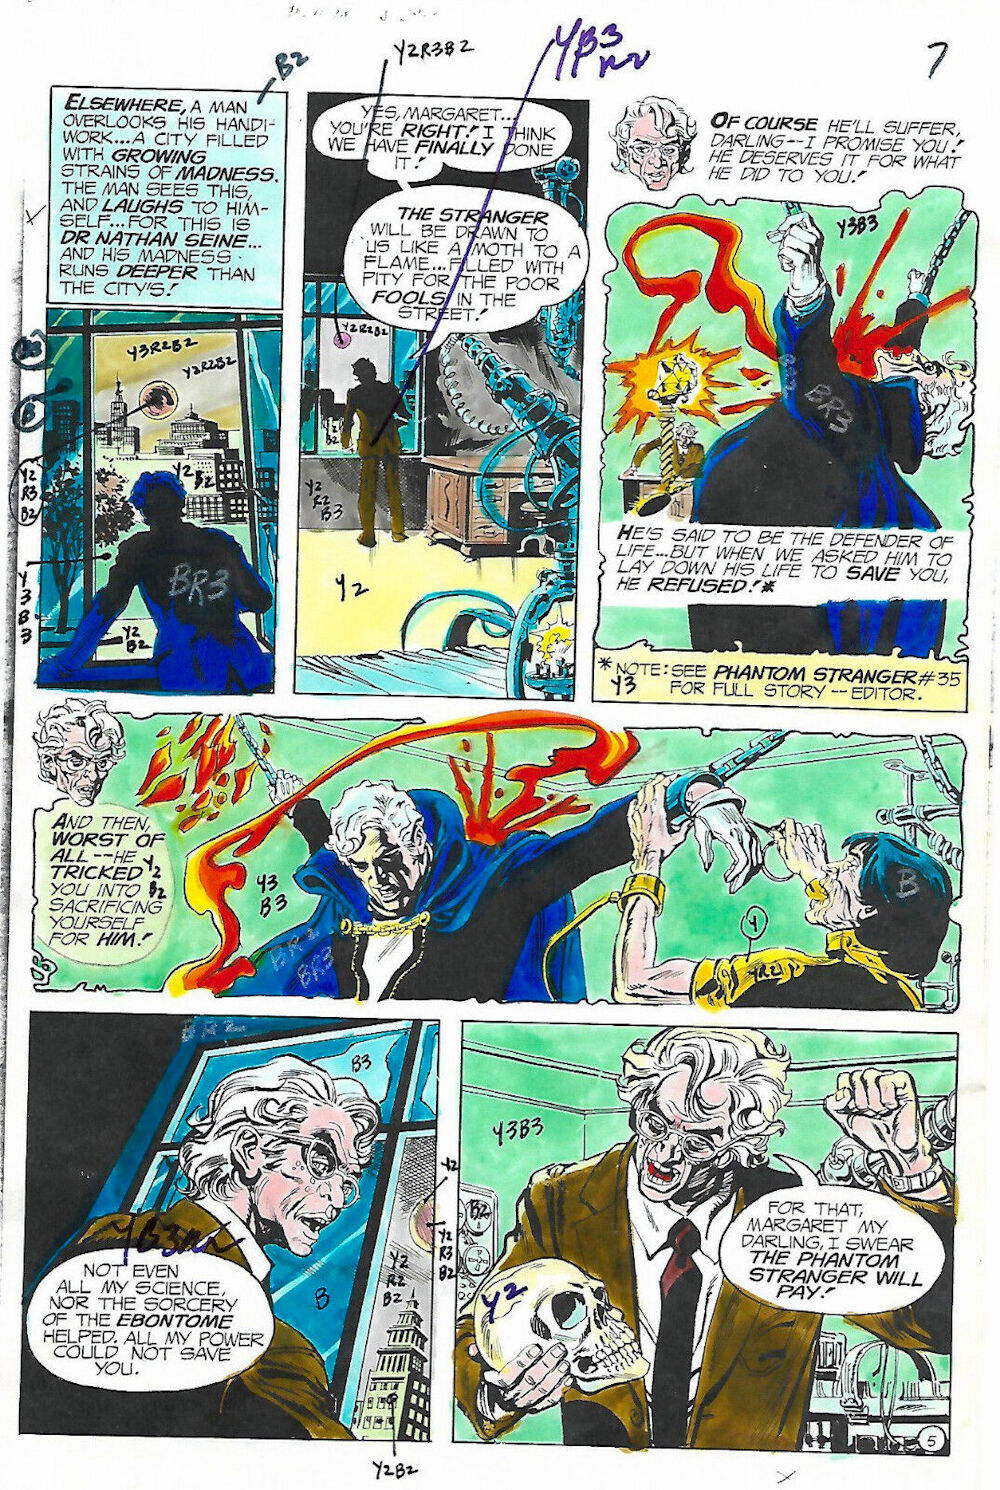 Original 1975 Phantom Stranger 38 page 7 DC Comics vintage color guide art:1970s - $55.29